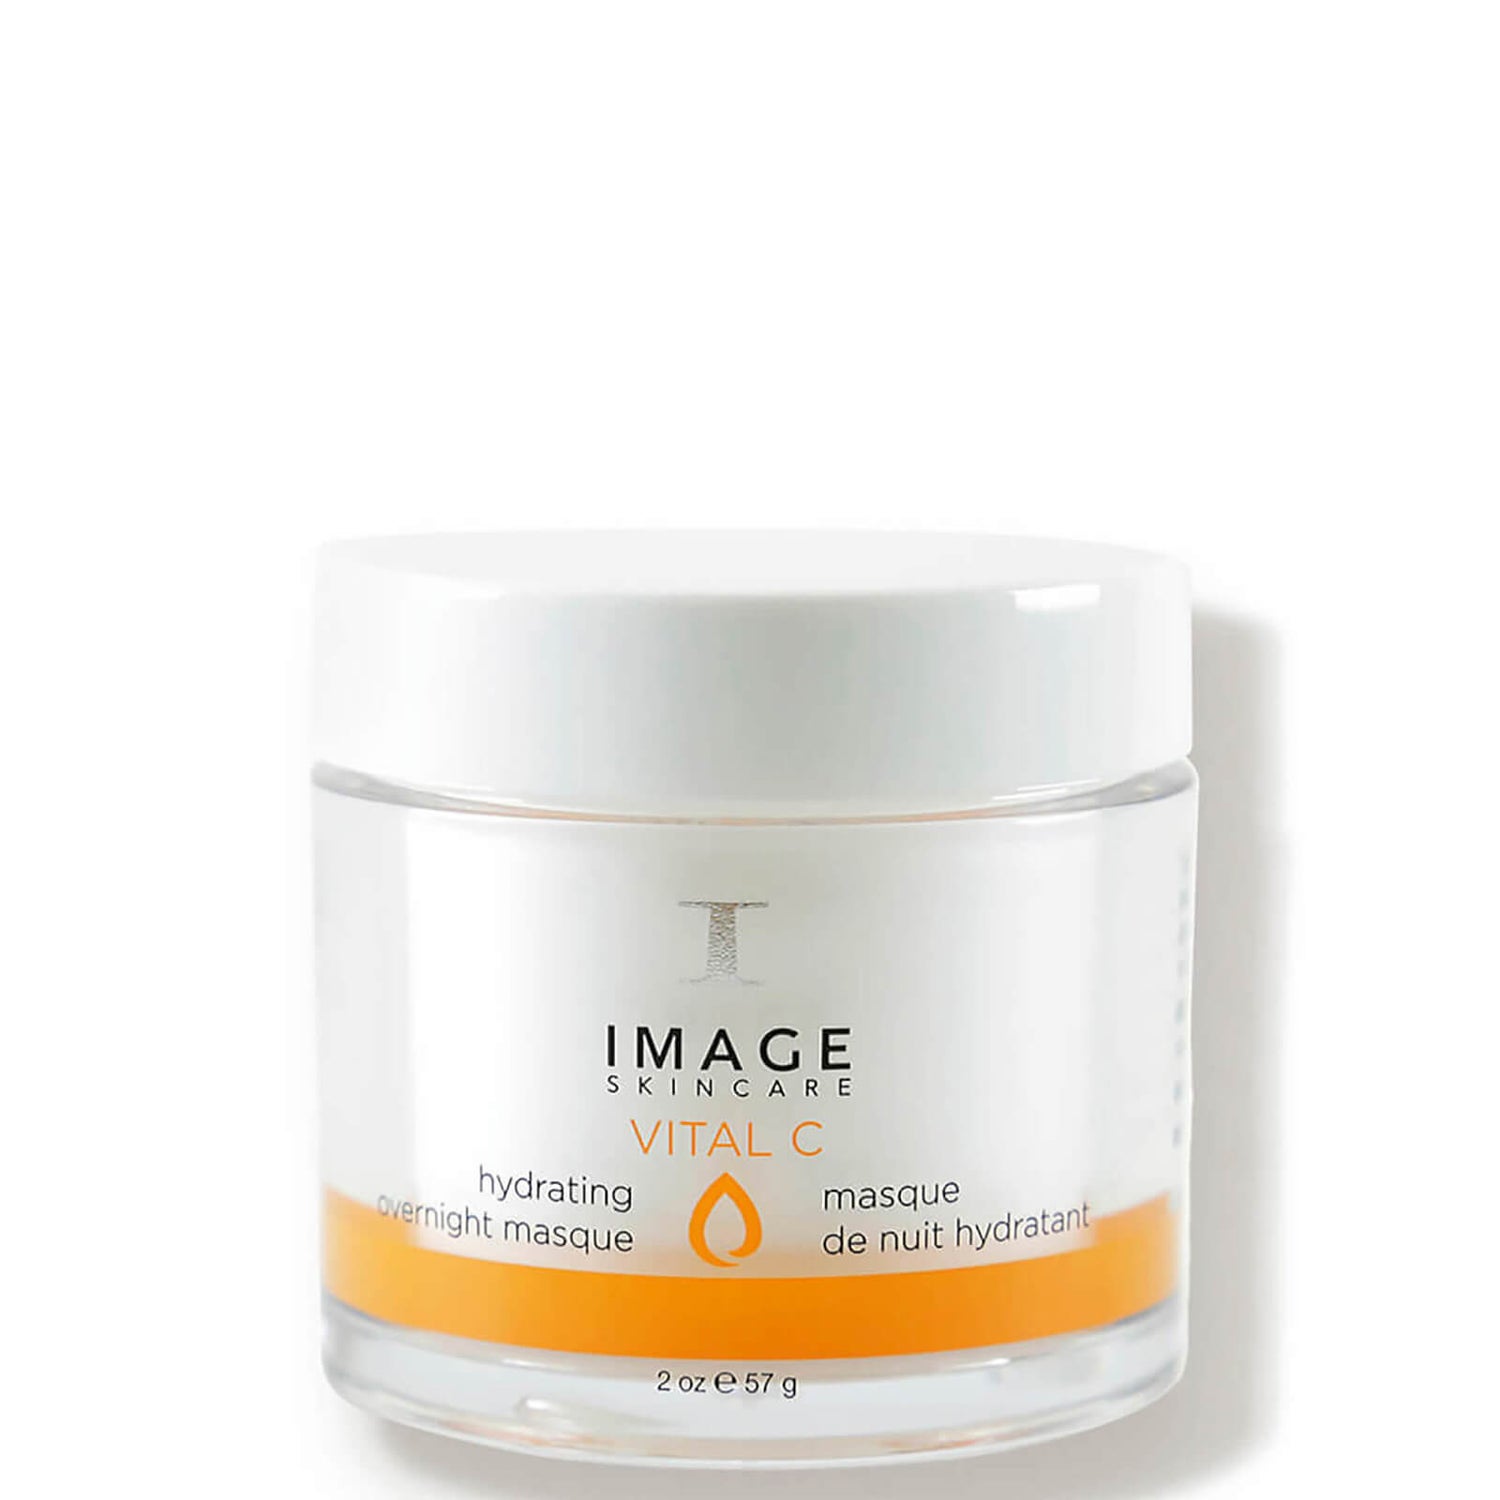 IMAGE Skincare VITAL C Hydrating Overnight Masque (2 oz.)